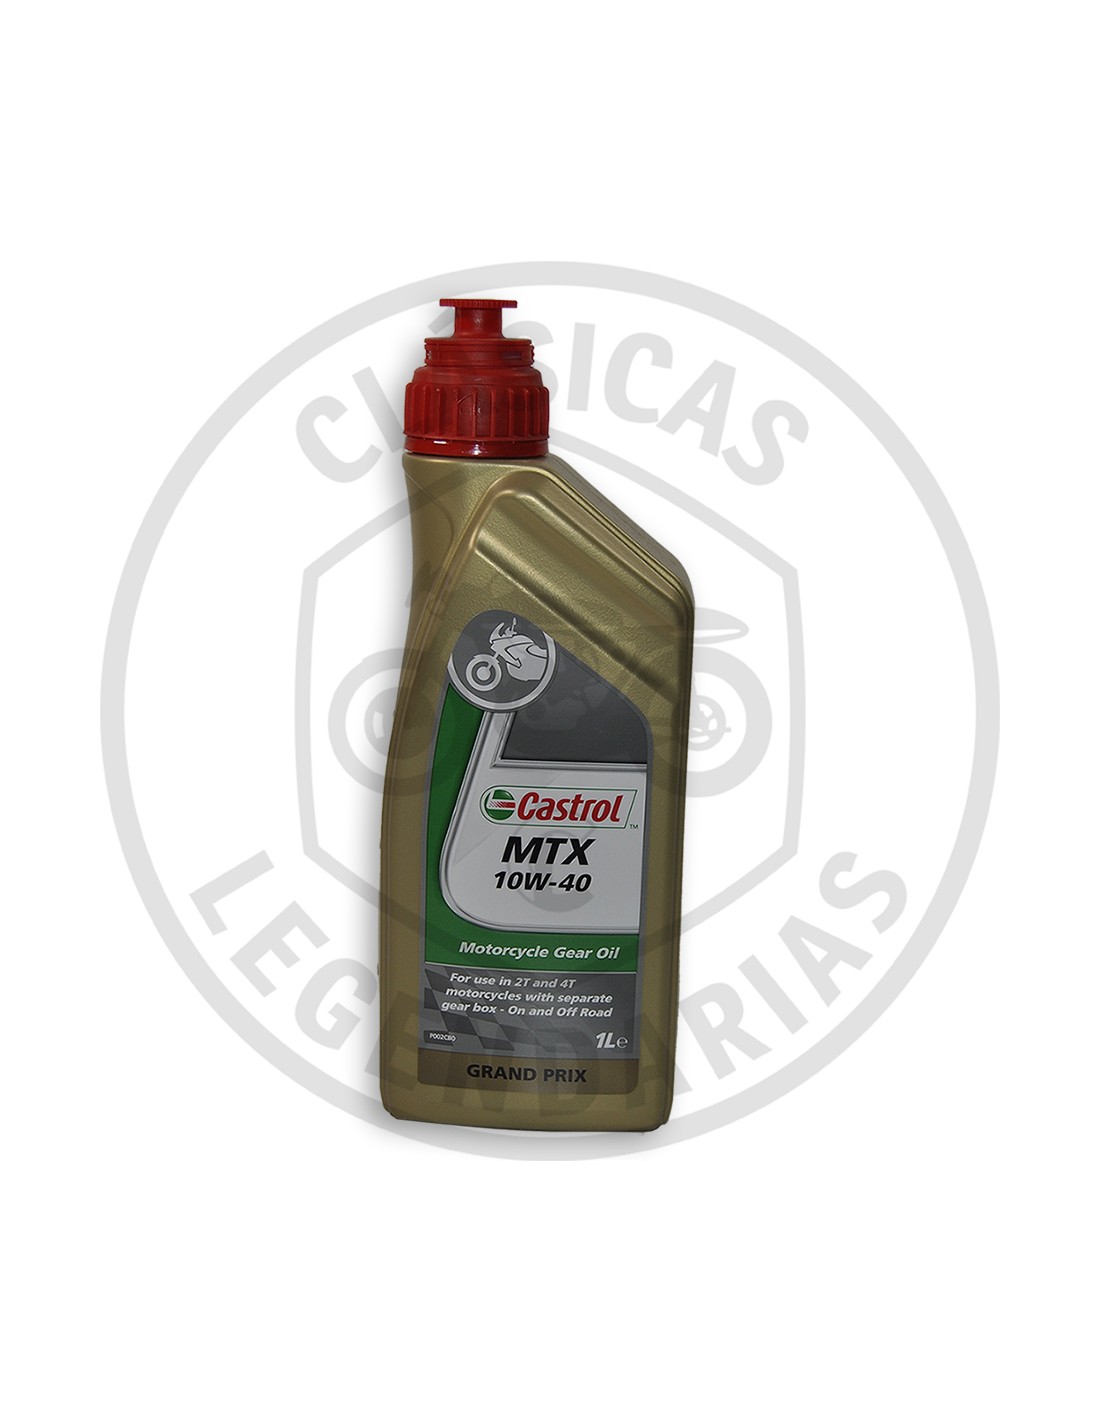 Aceite Castrol MTX 10w40